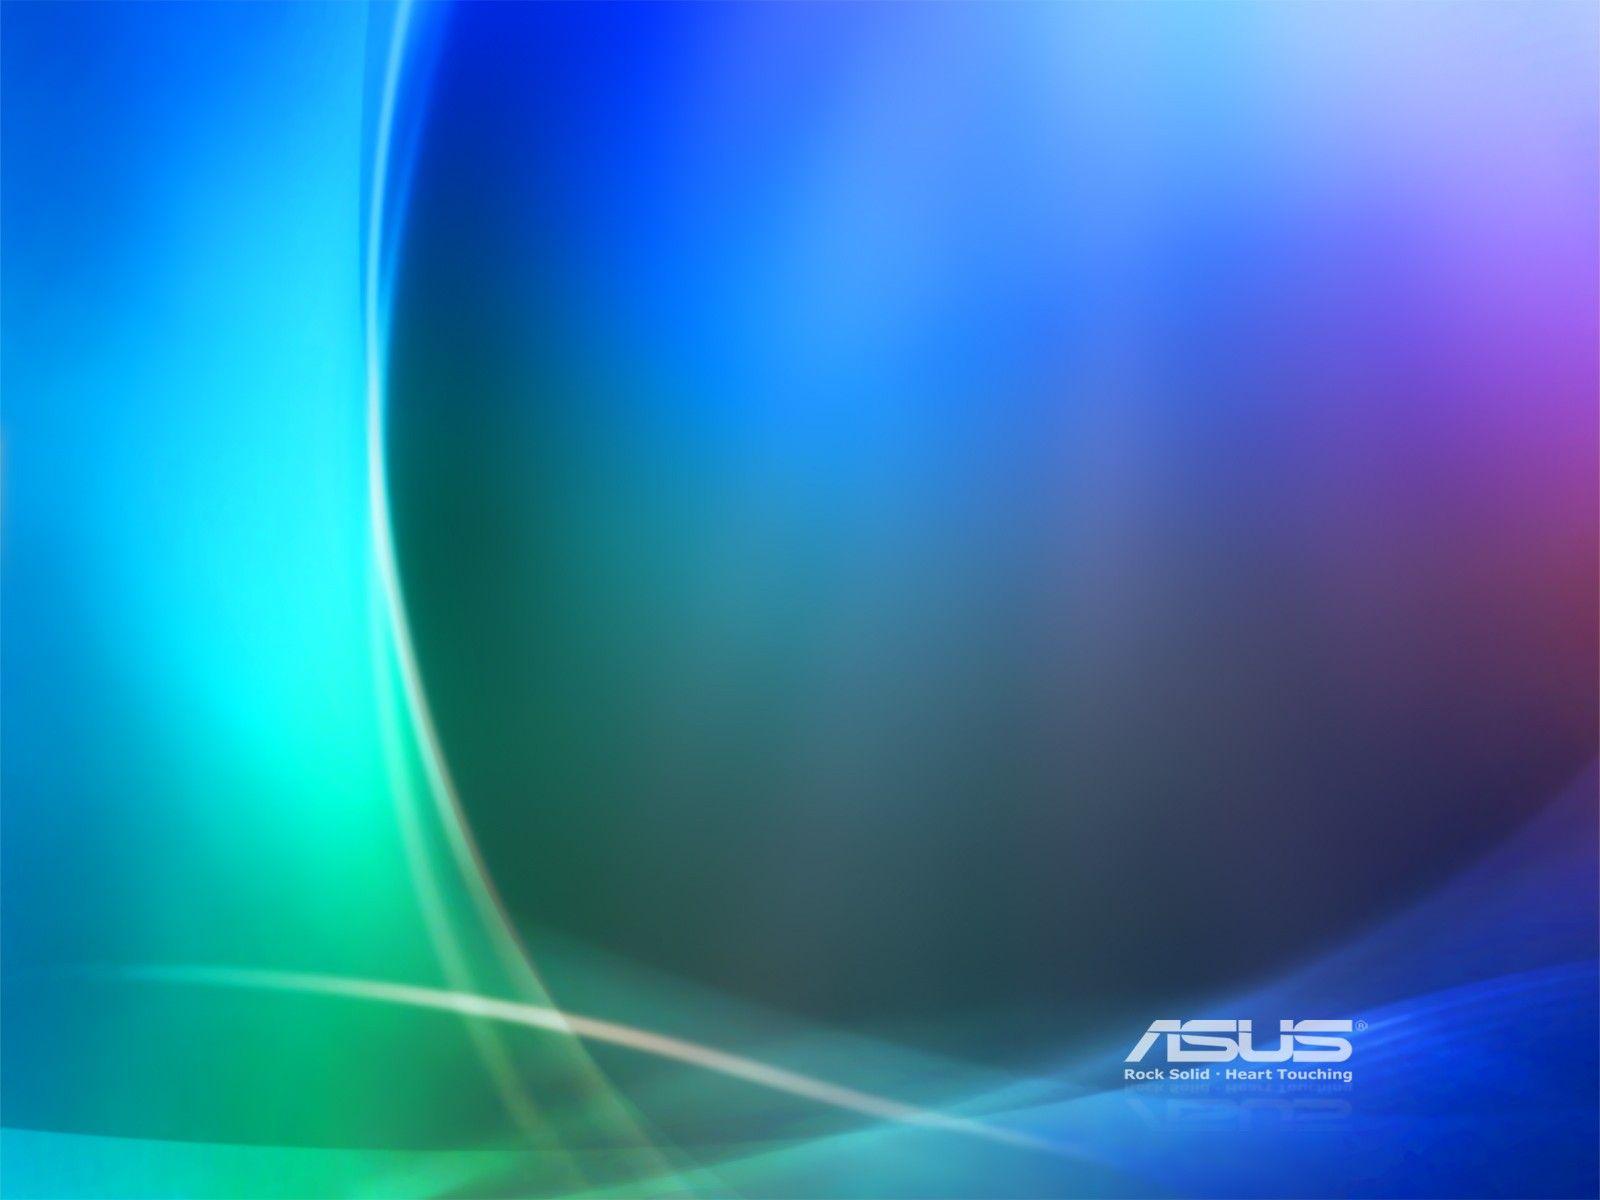 Tony Colorfull Asus Windows Screensaver in Aurora Theme Colors